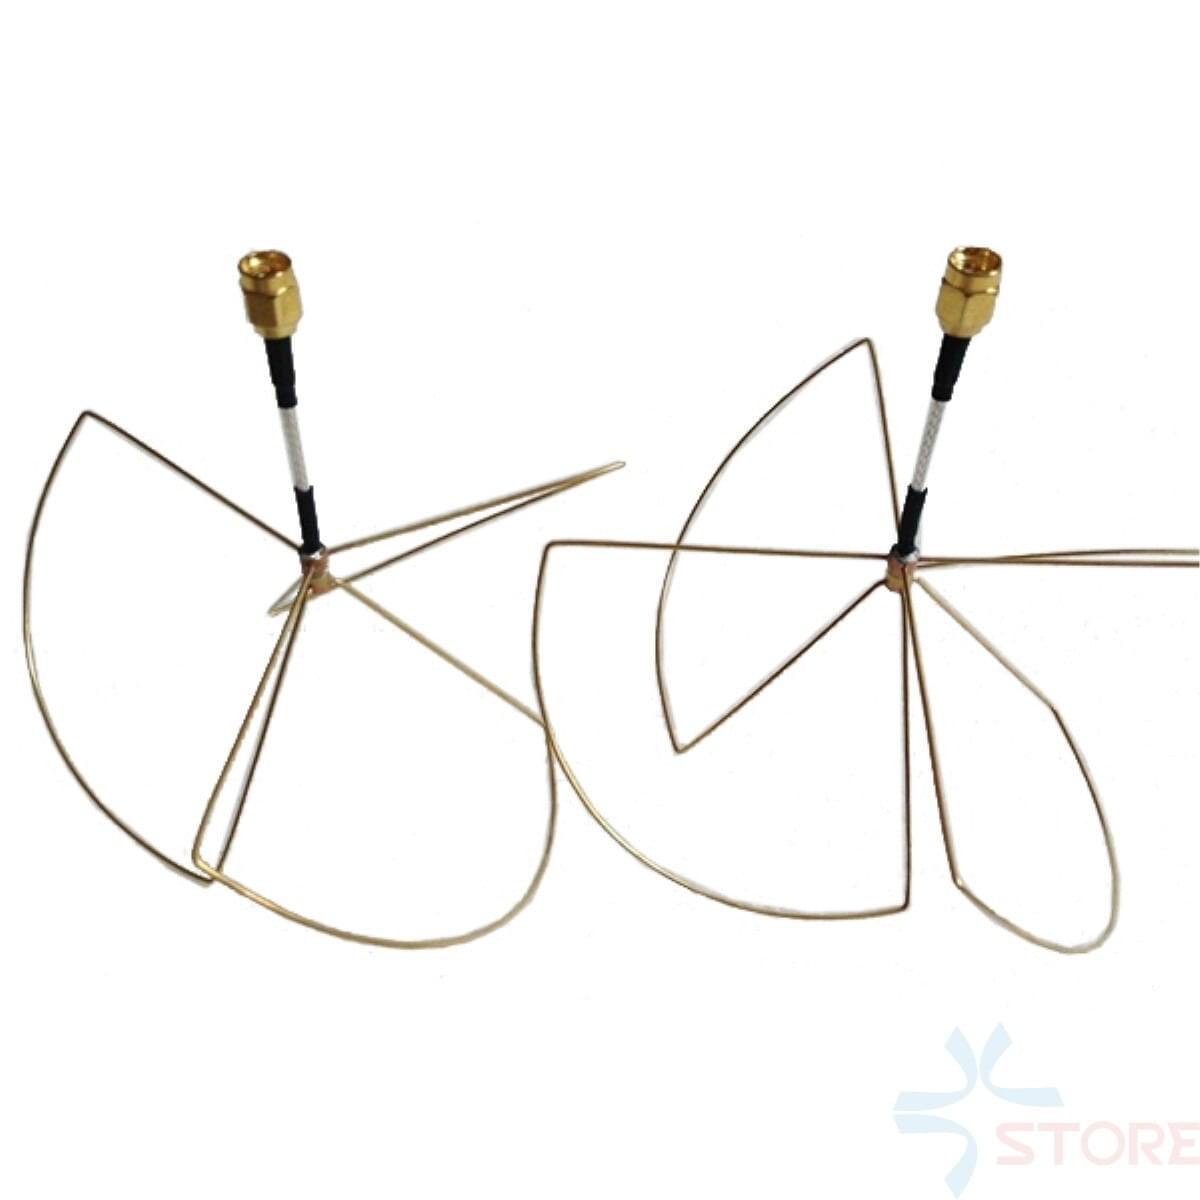 1.2G 1.2GHz Clover Leaf Antenna Circular Polarized SMA male for 1.2Ghz 1.3Ghz Video Transmitter Receiver LawMate Partom - RCDrone